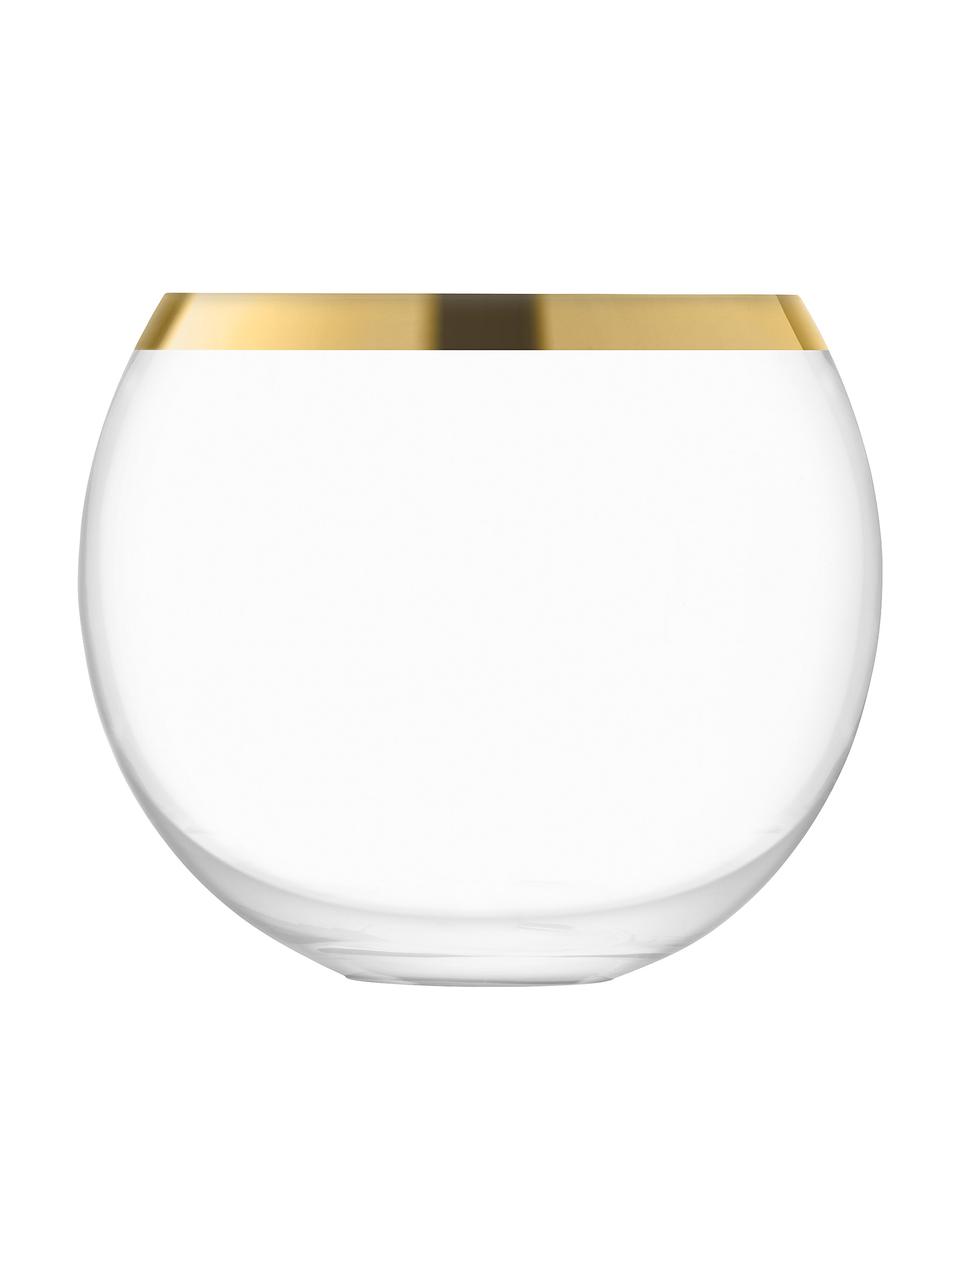 Mundgeblasene Cocktailgläser Luca mit Goldrand, 2 Stück, Glas, Transparent, Goldfarben, Ø 9 x H 8 cm, 330 ml